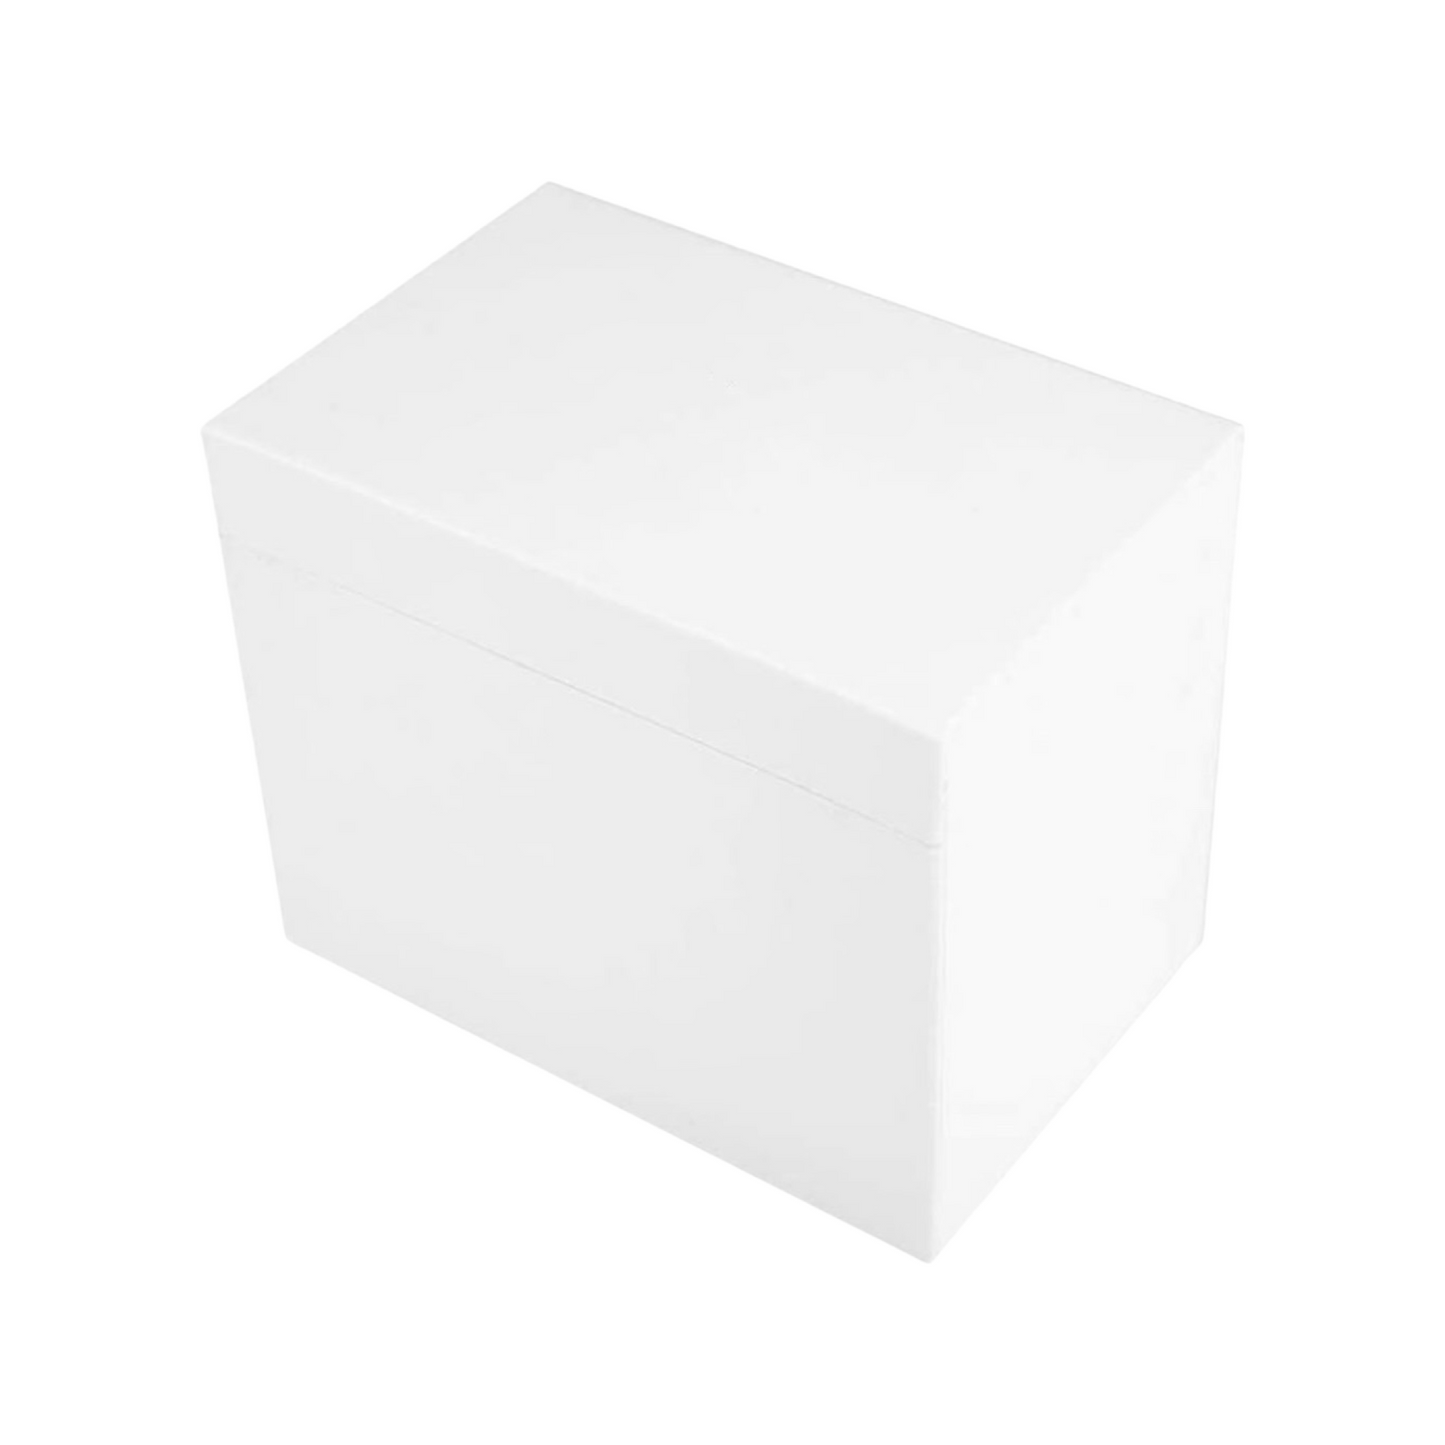 Acrylic Tile Box